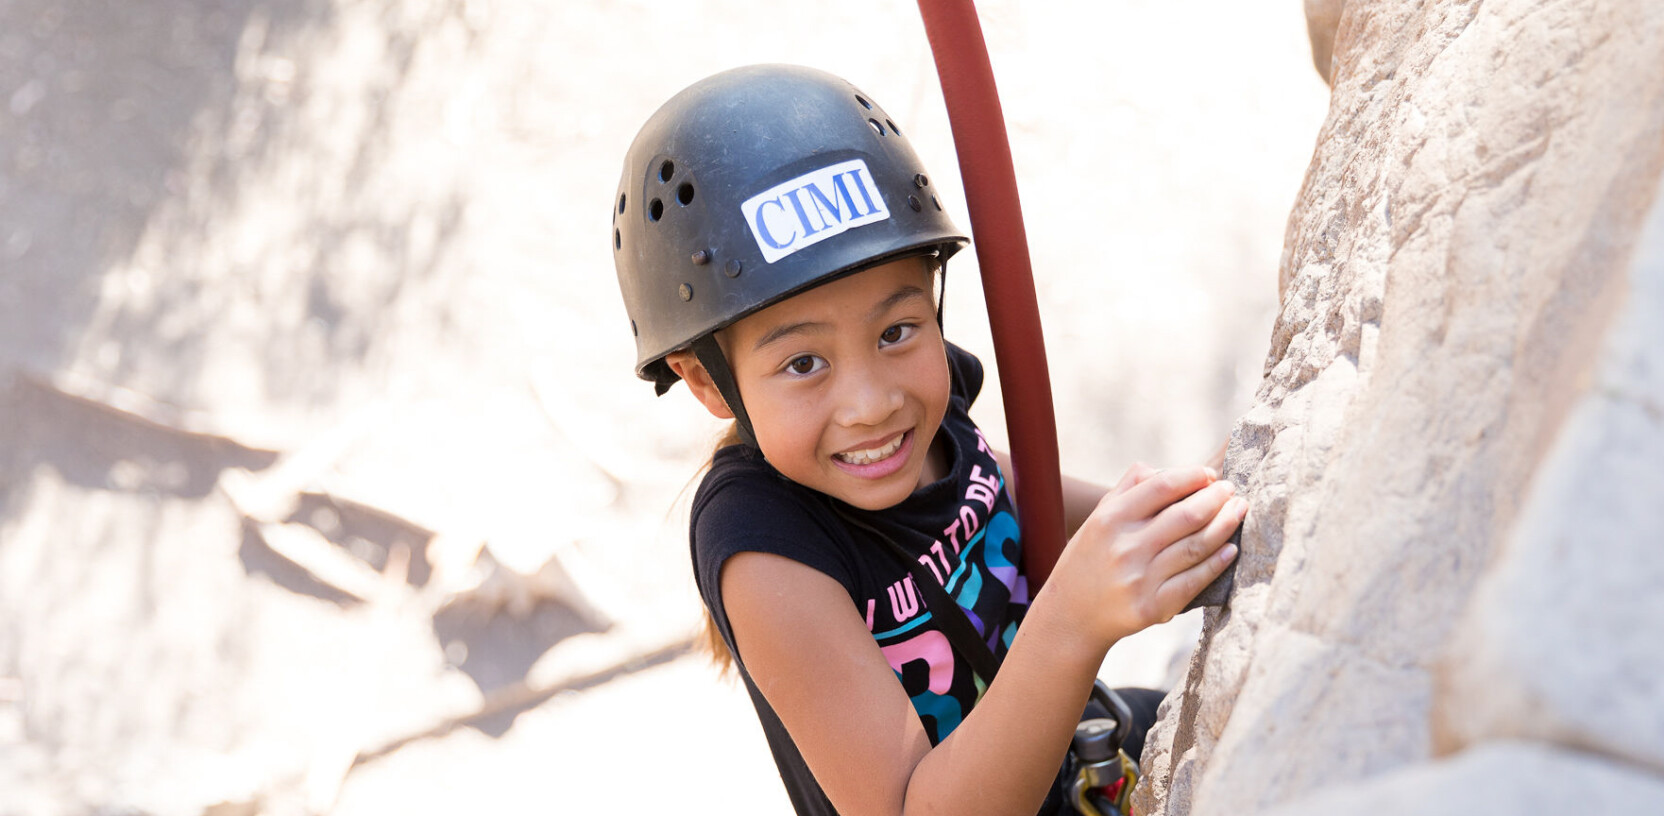 Girl rock climbing smiling.